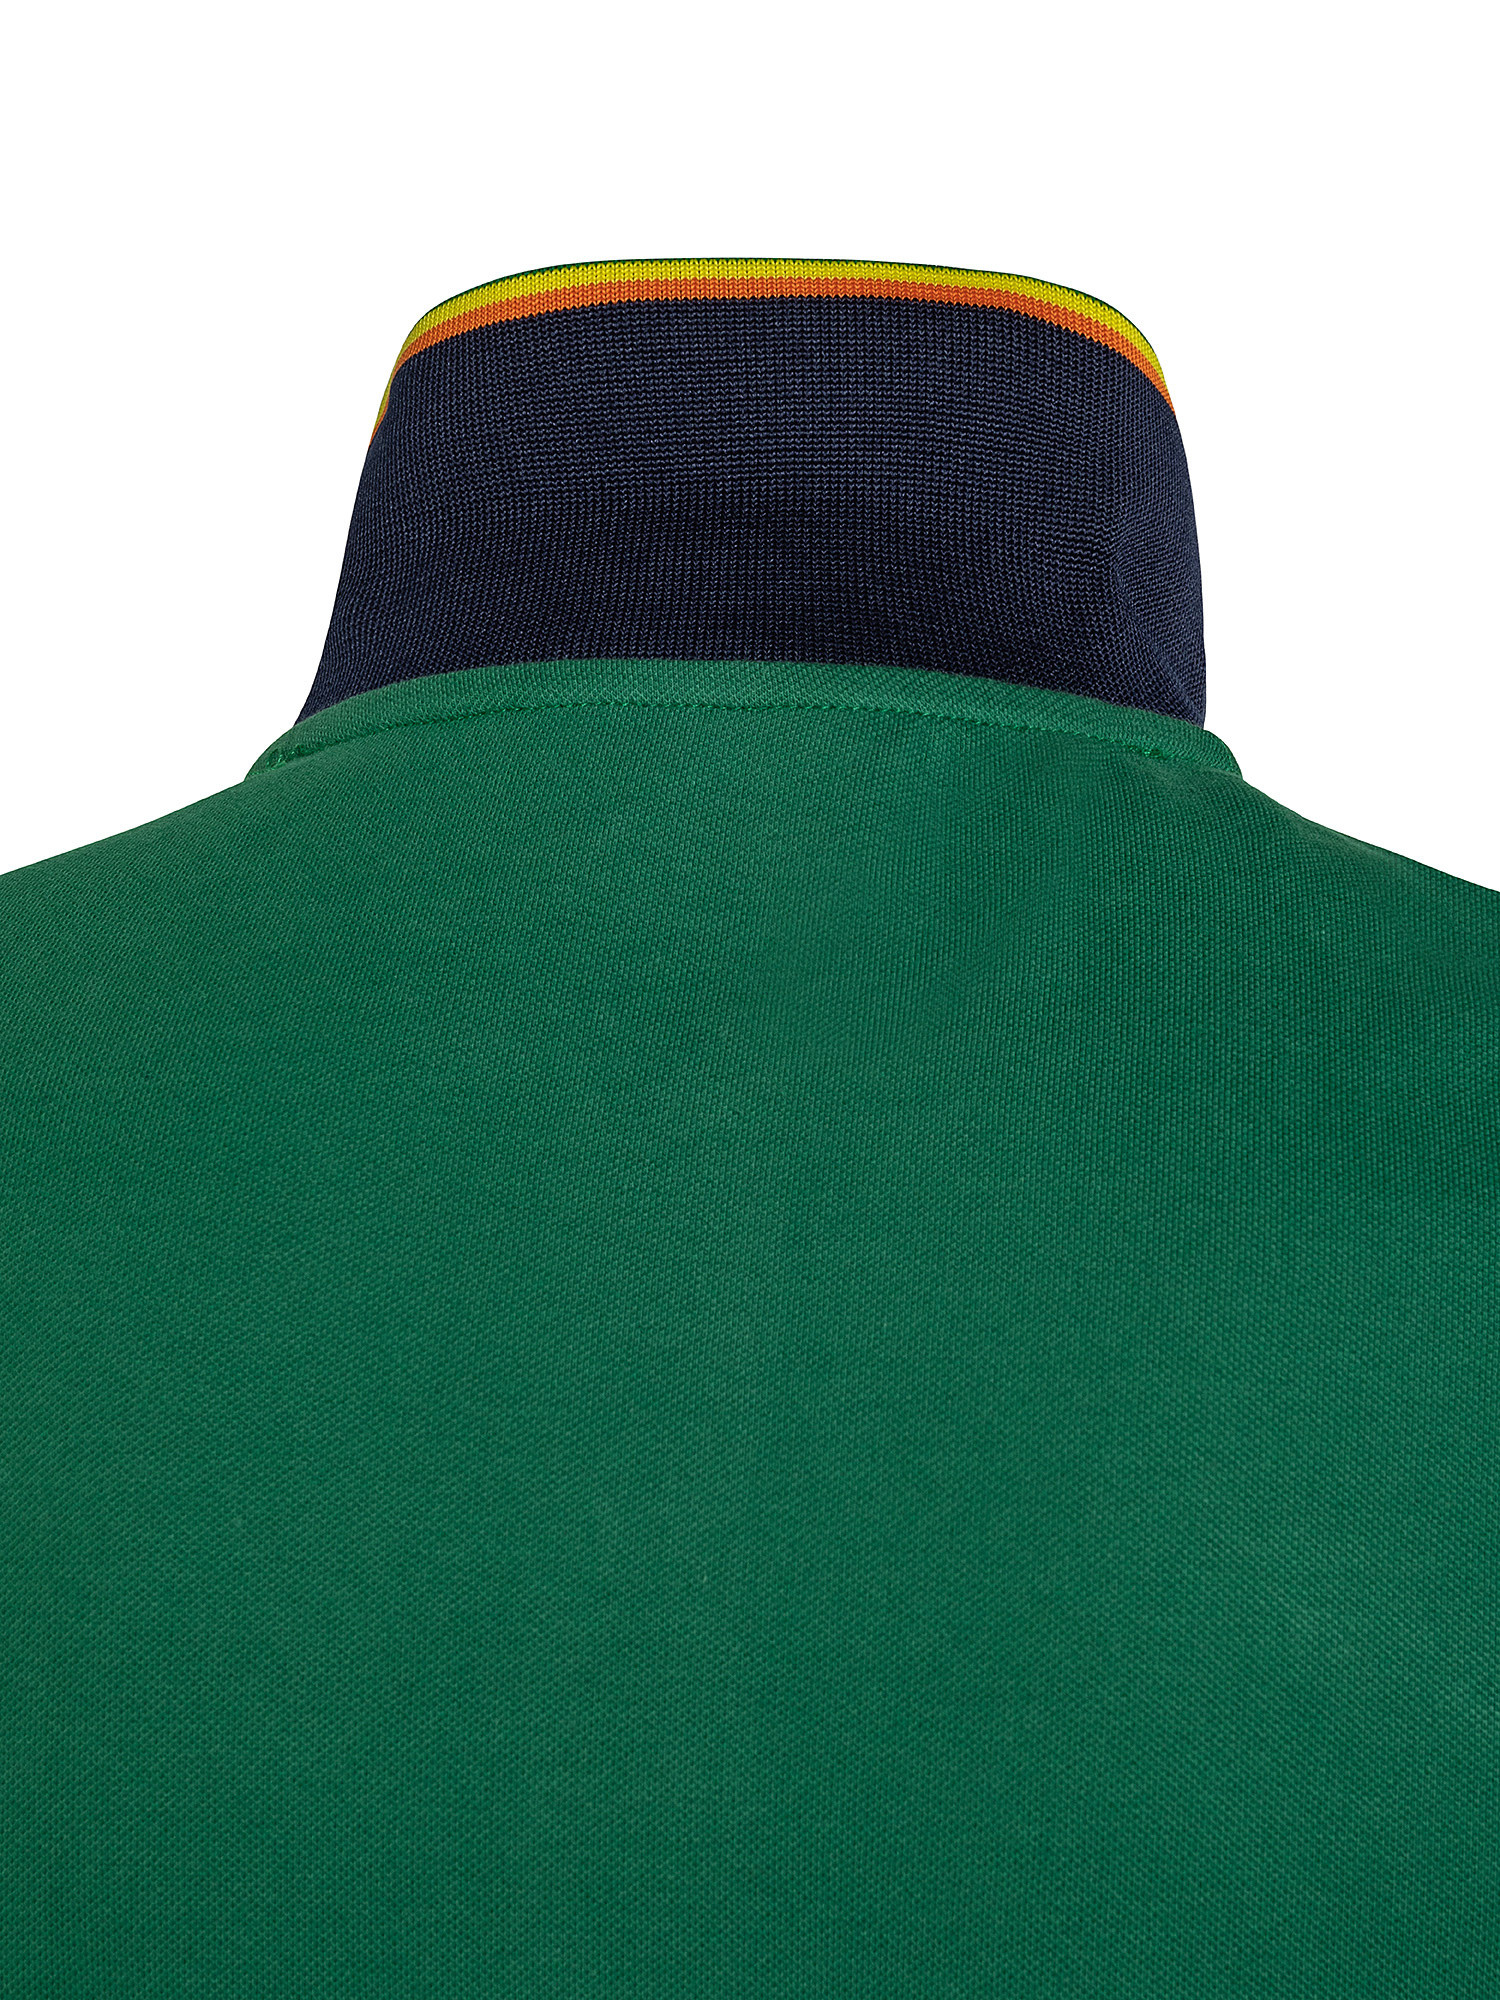 Polo slim fit elasticizzata, Verde scuro, large image number 2